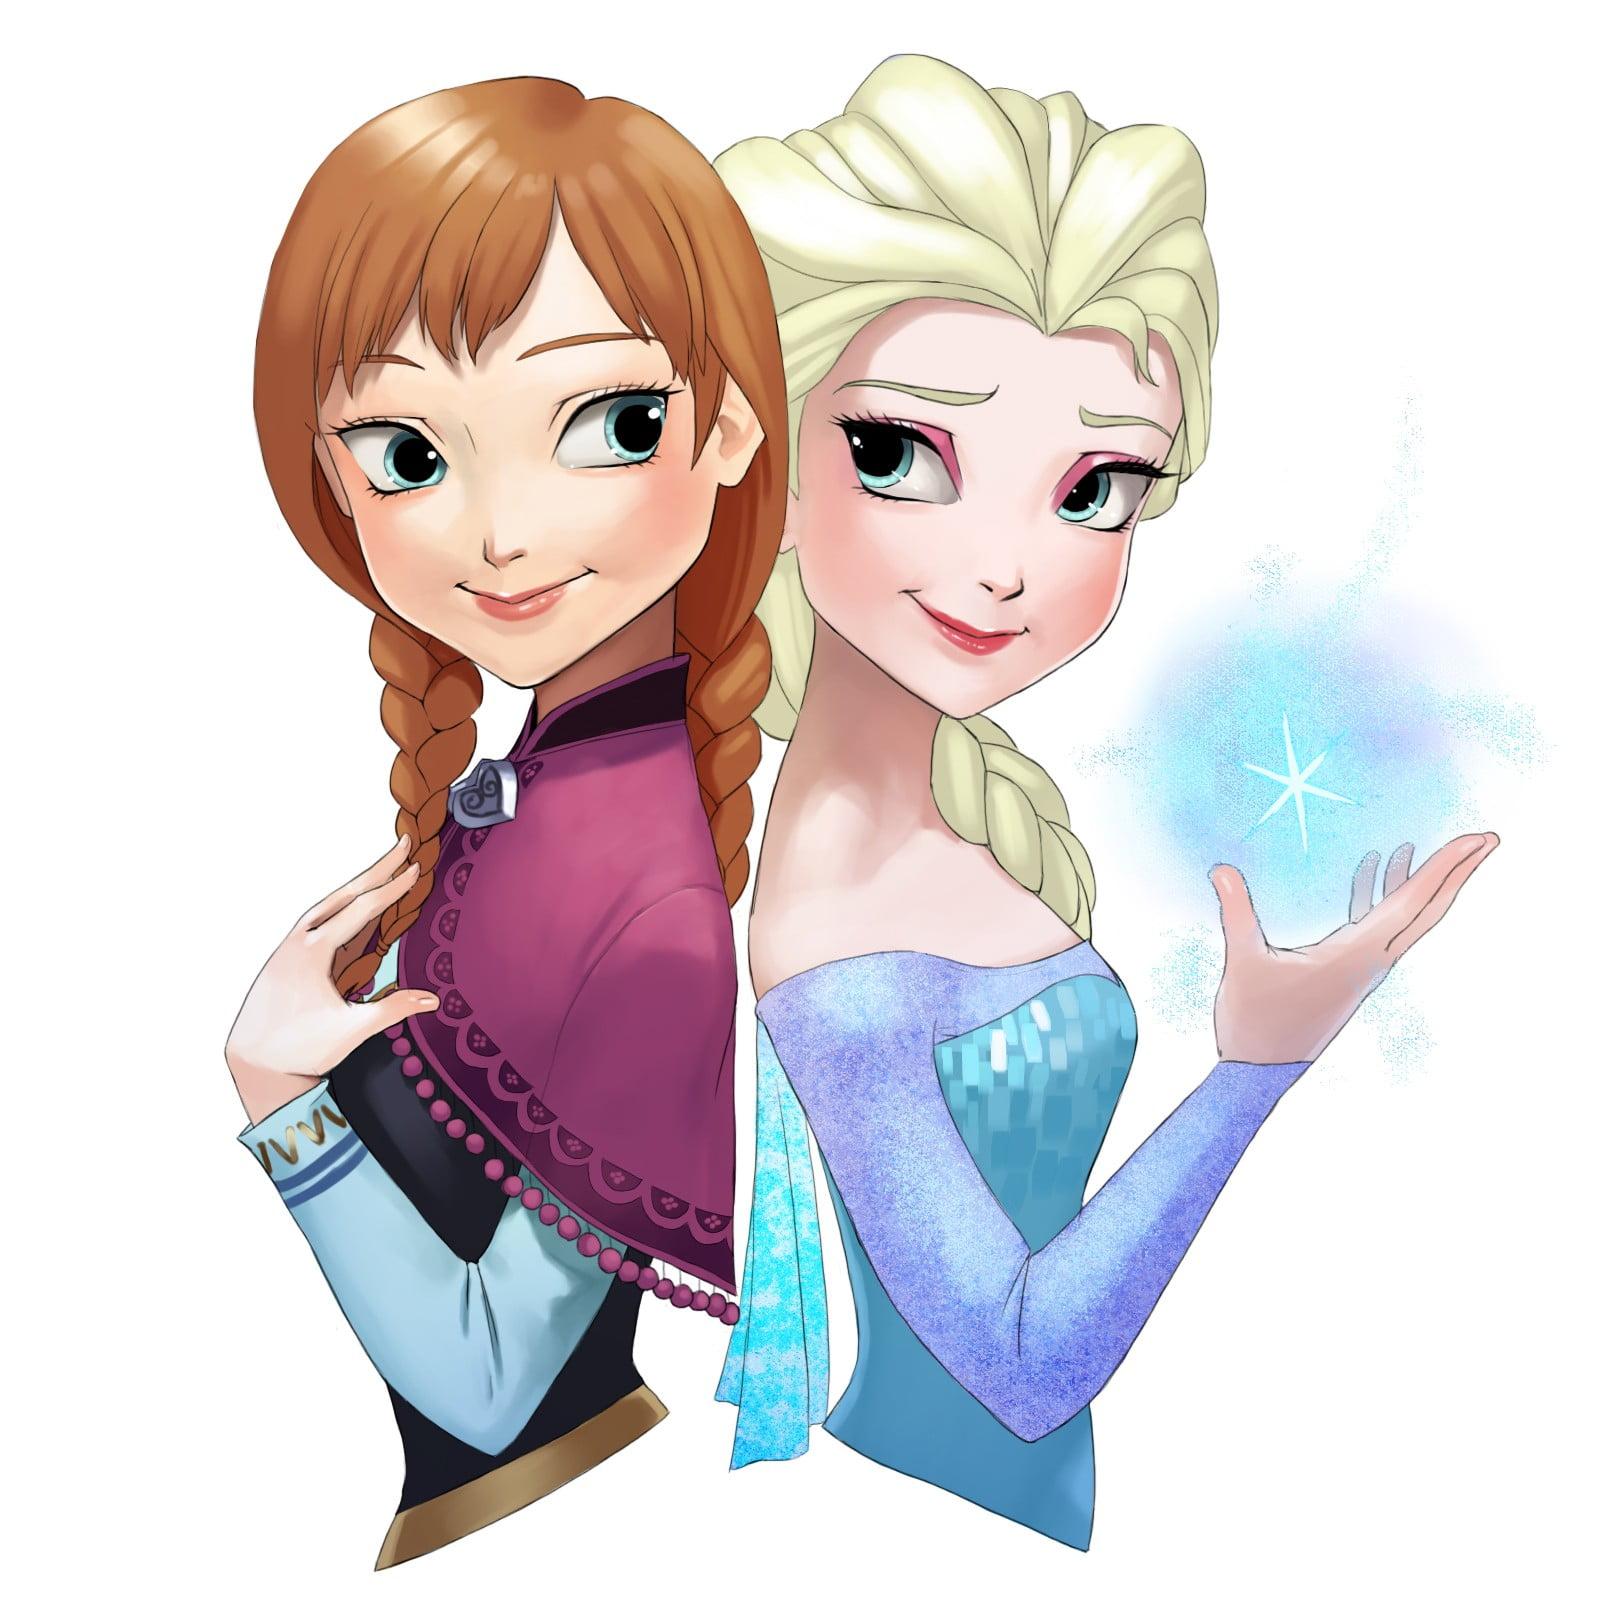 Disney Frozen Elsa and Anna illustration, Frozen (movie), Princess